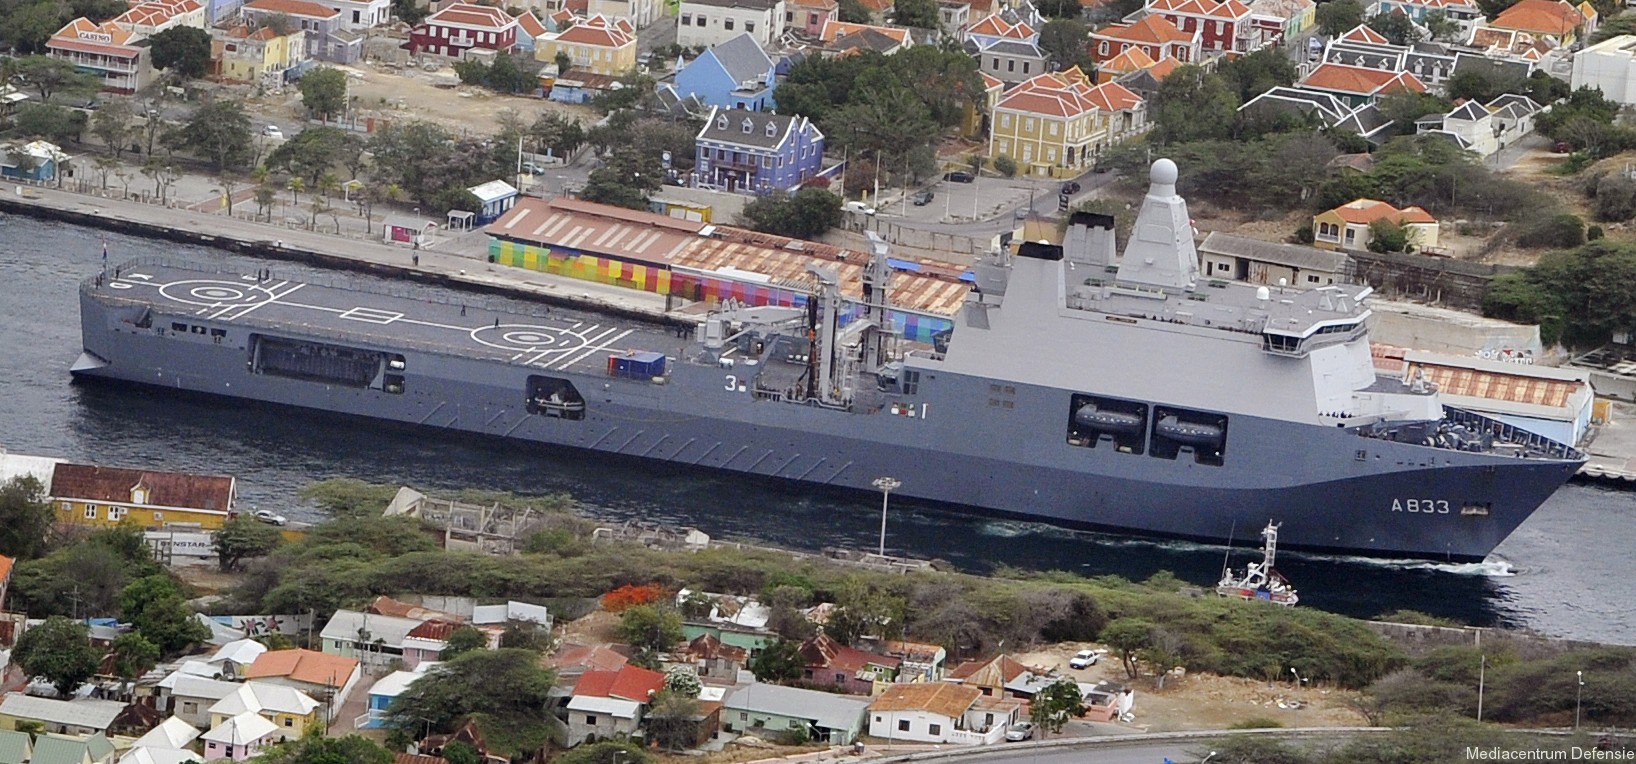 a-833 hnlms karel doorman joint support ship royal netherlands navy koninklijke marine 21